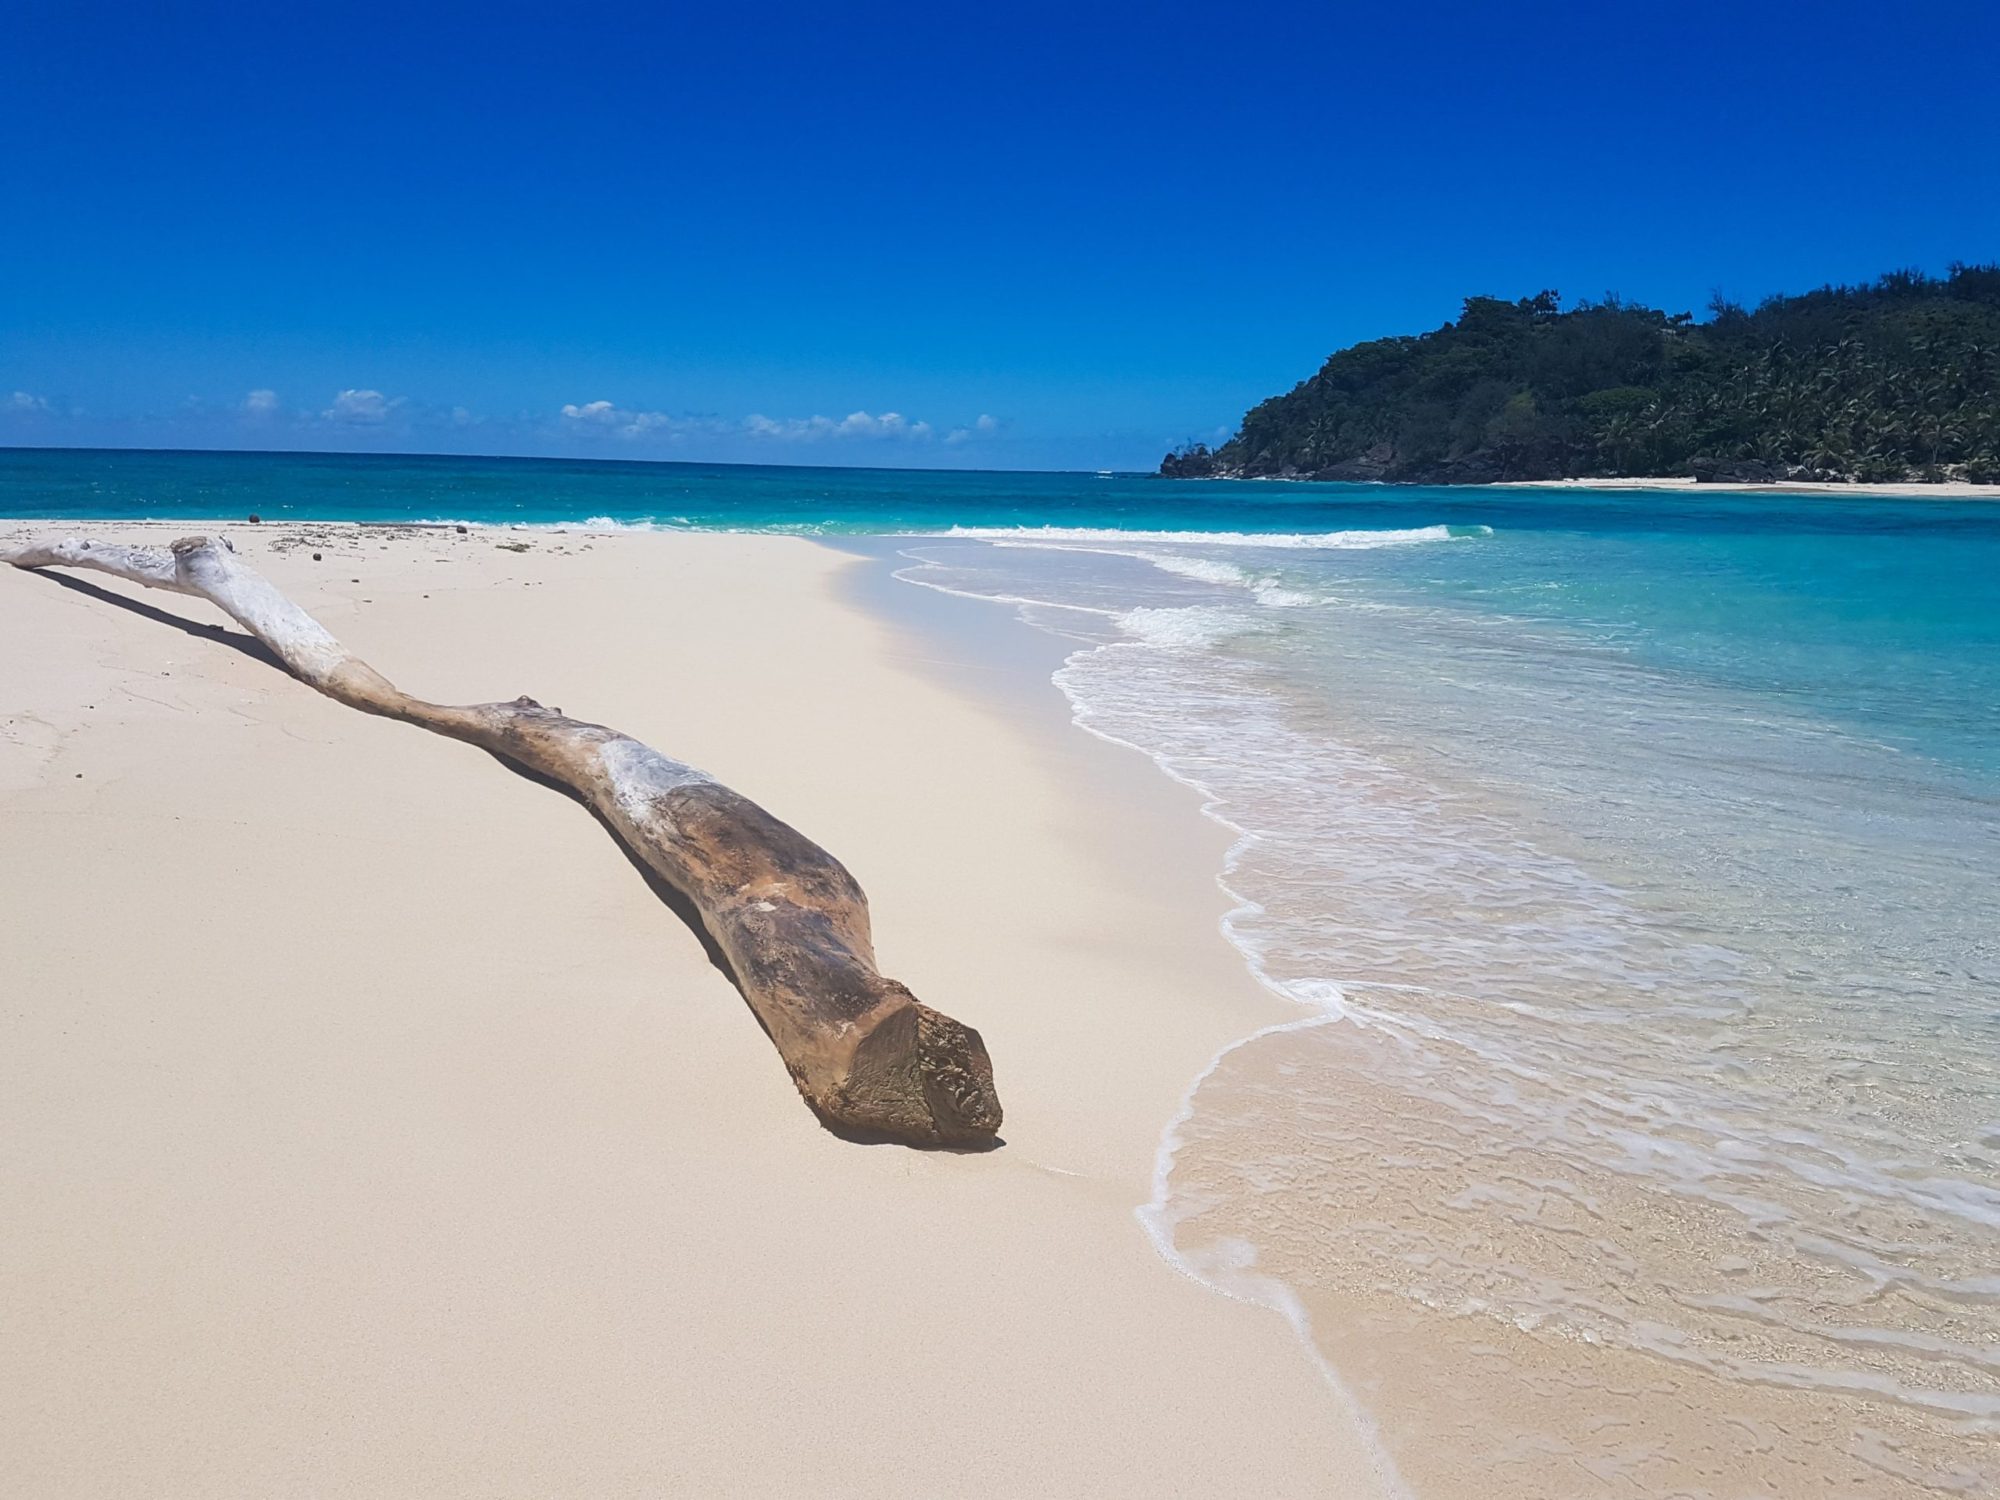 honeymoon destination in Fiji?